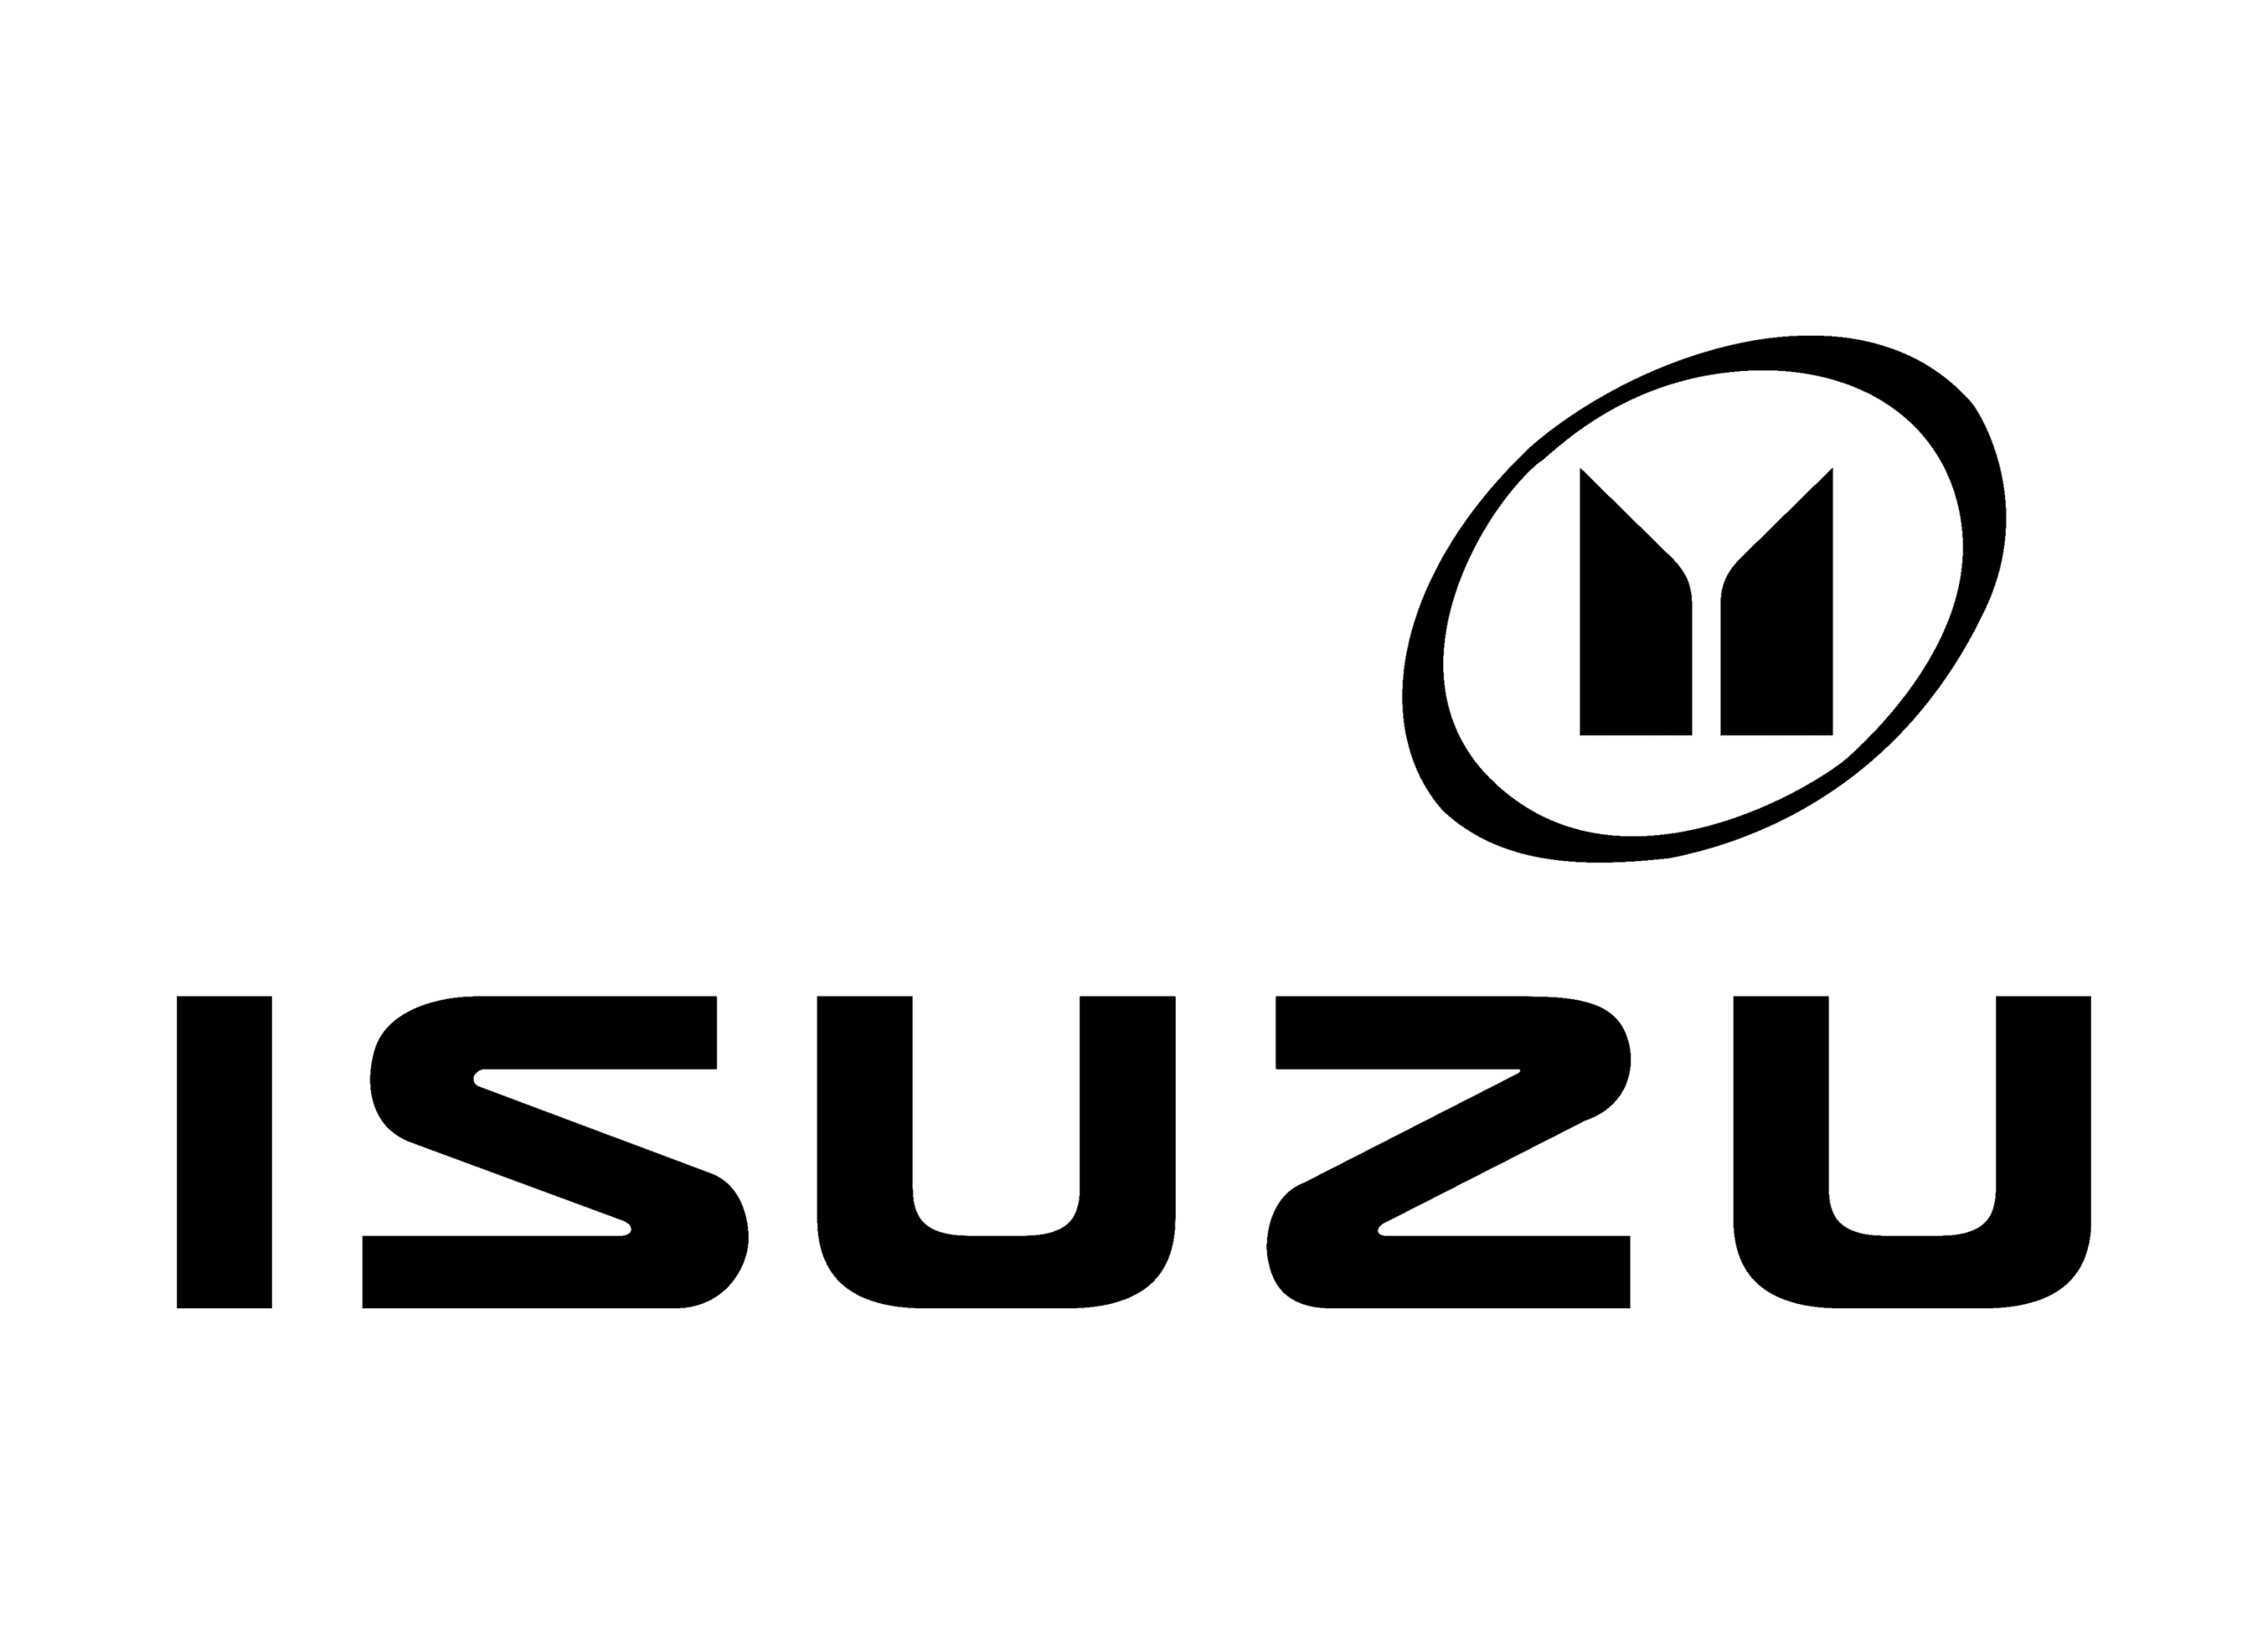 Isuzu symbol